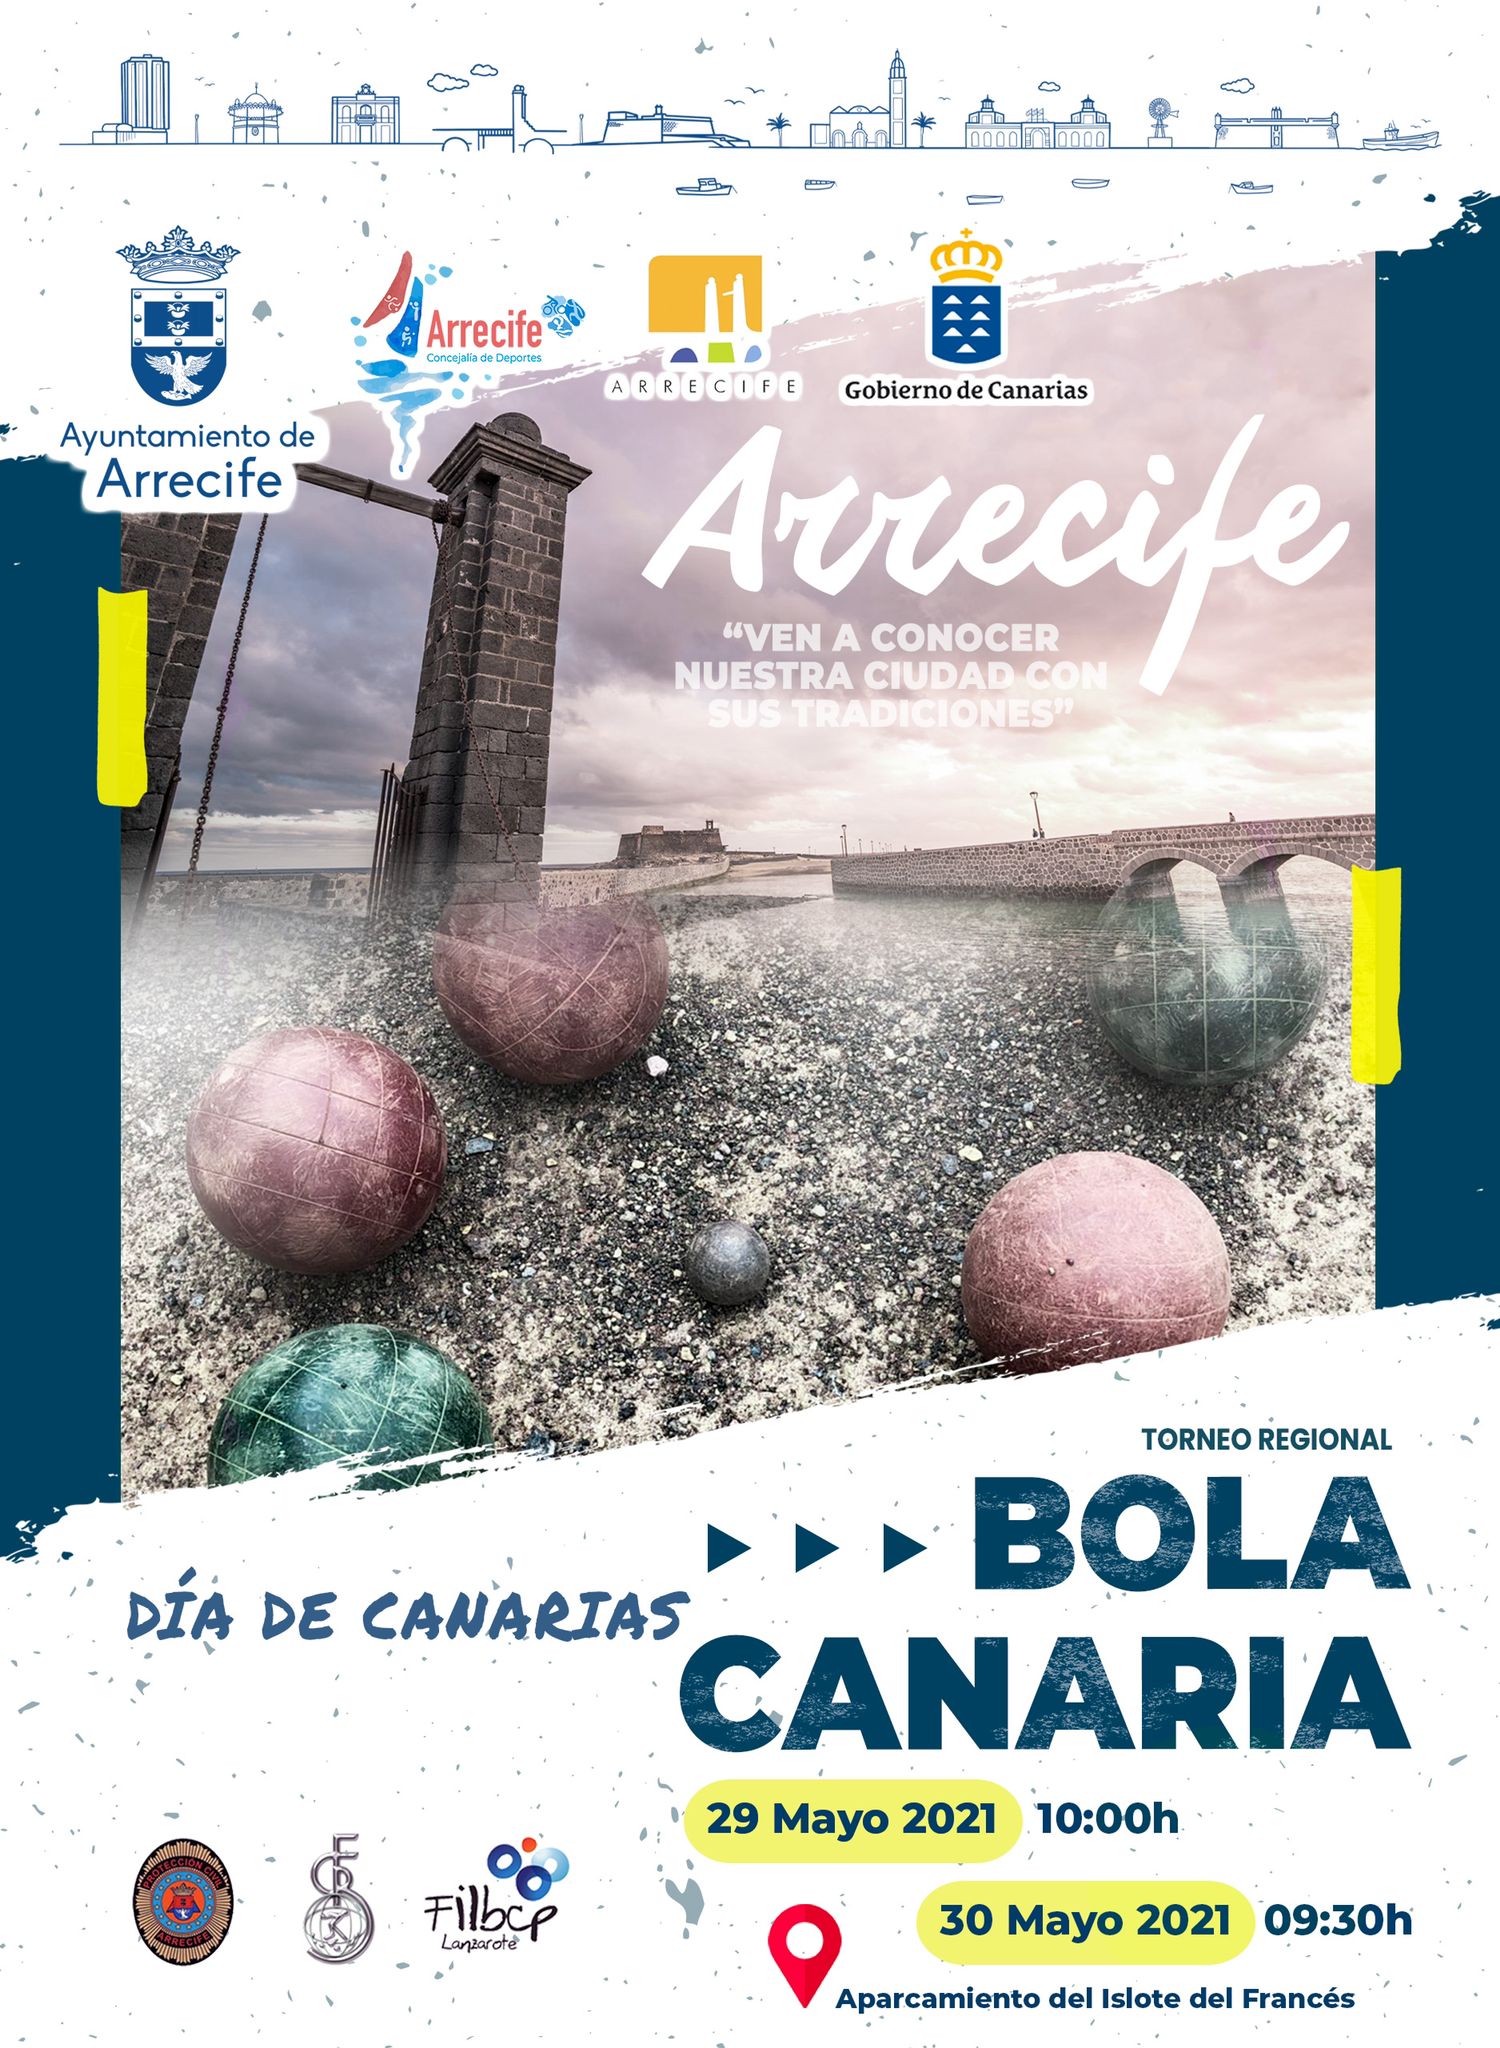 Cartel-definitivo-Dia-de-Canarias-2021 Arrecife acogerá el primer Torneo Regional de Bola Canaria